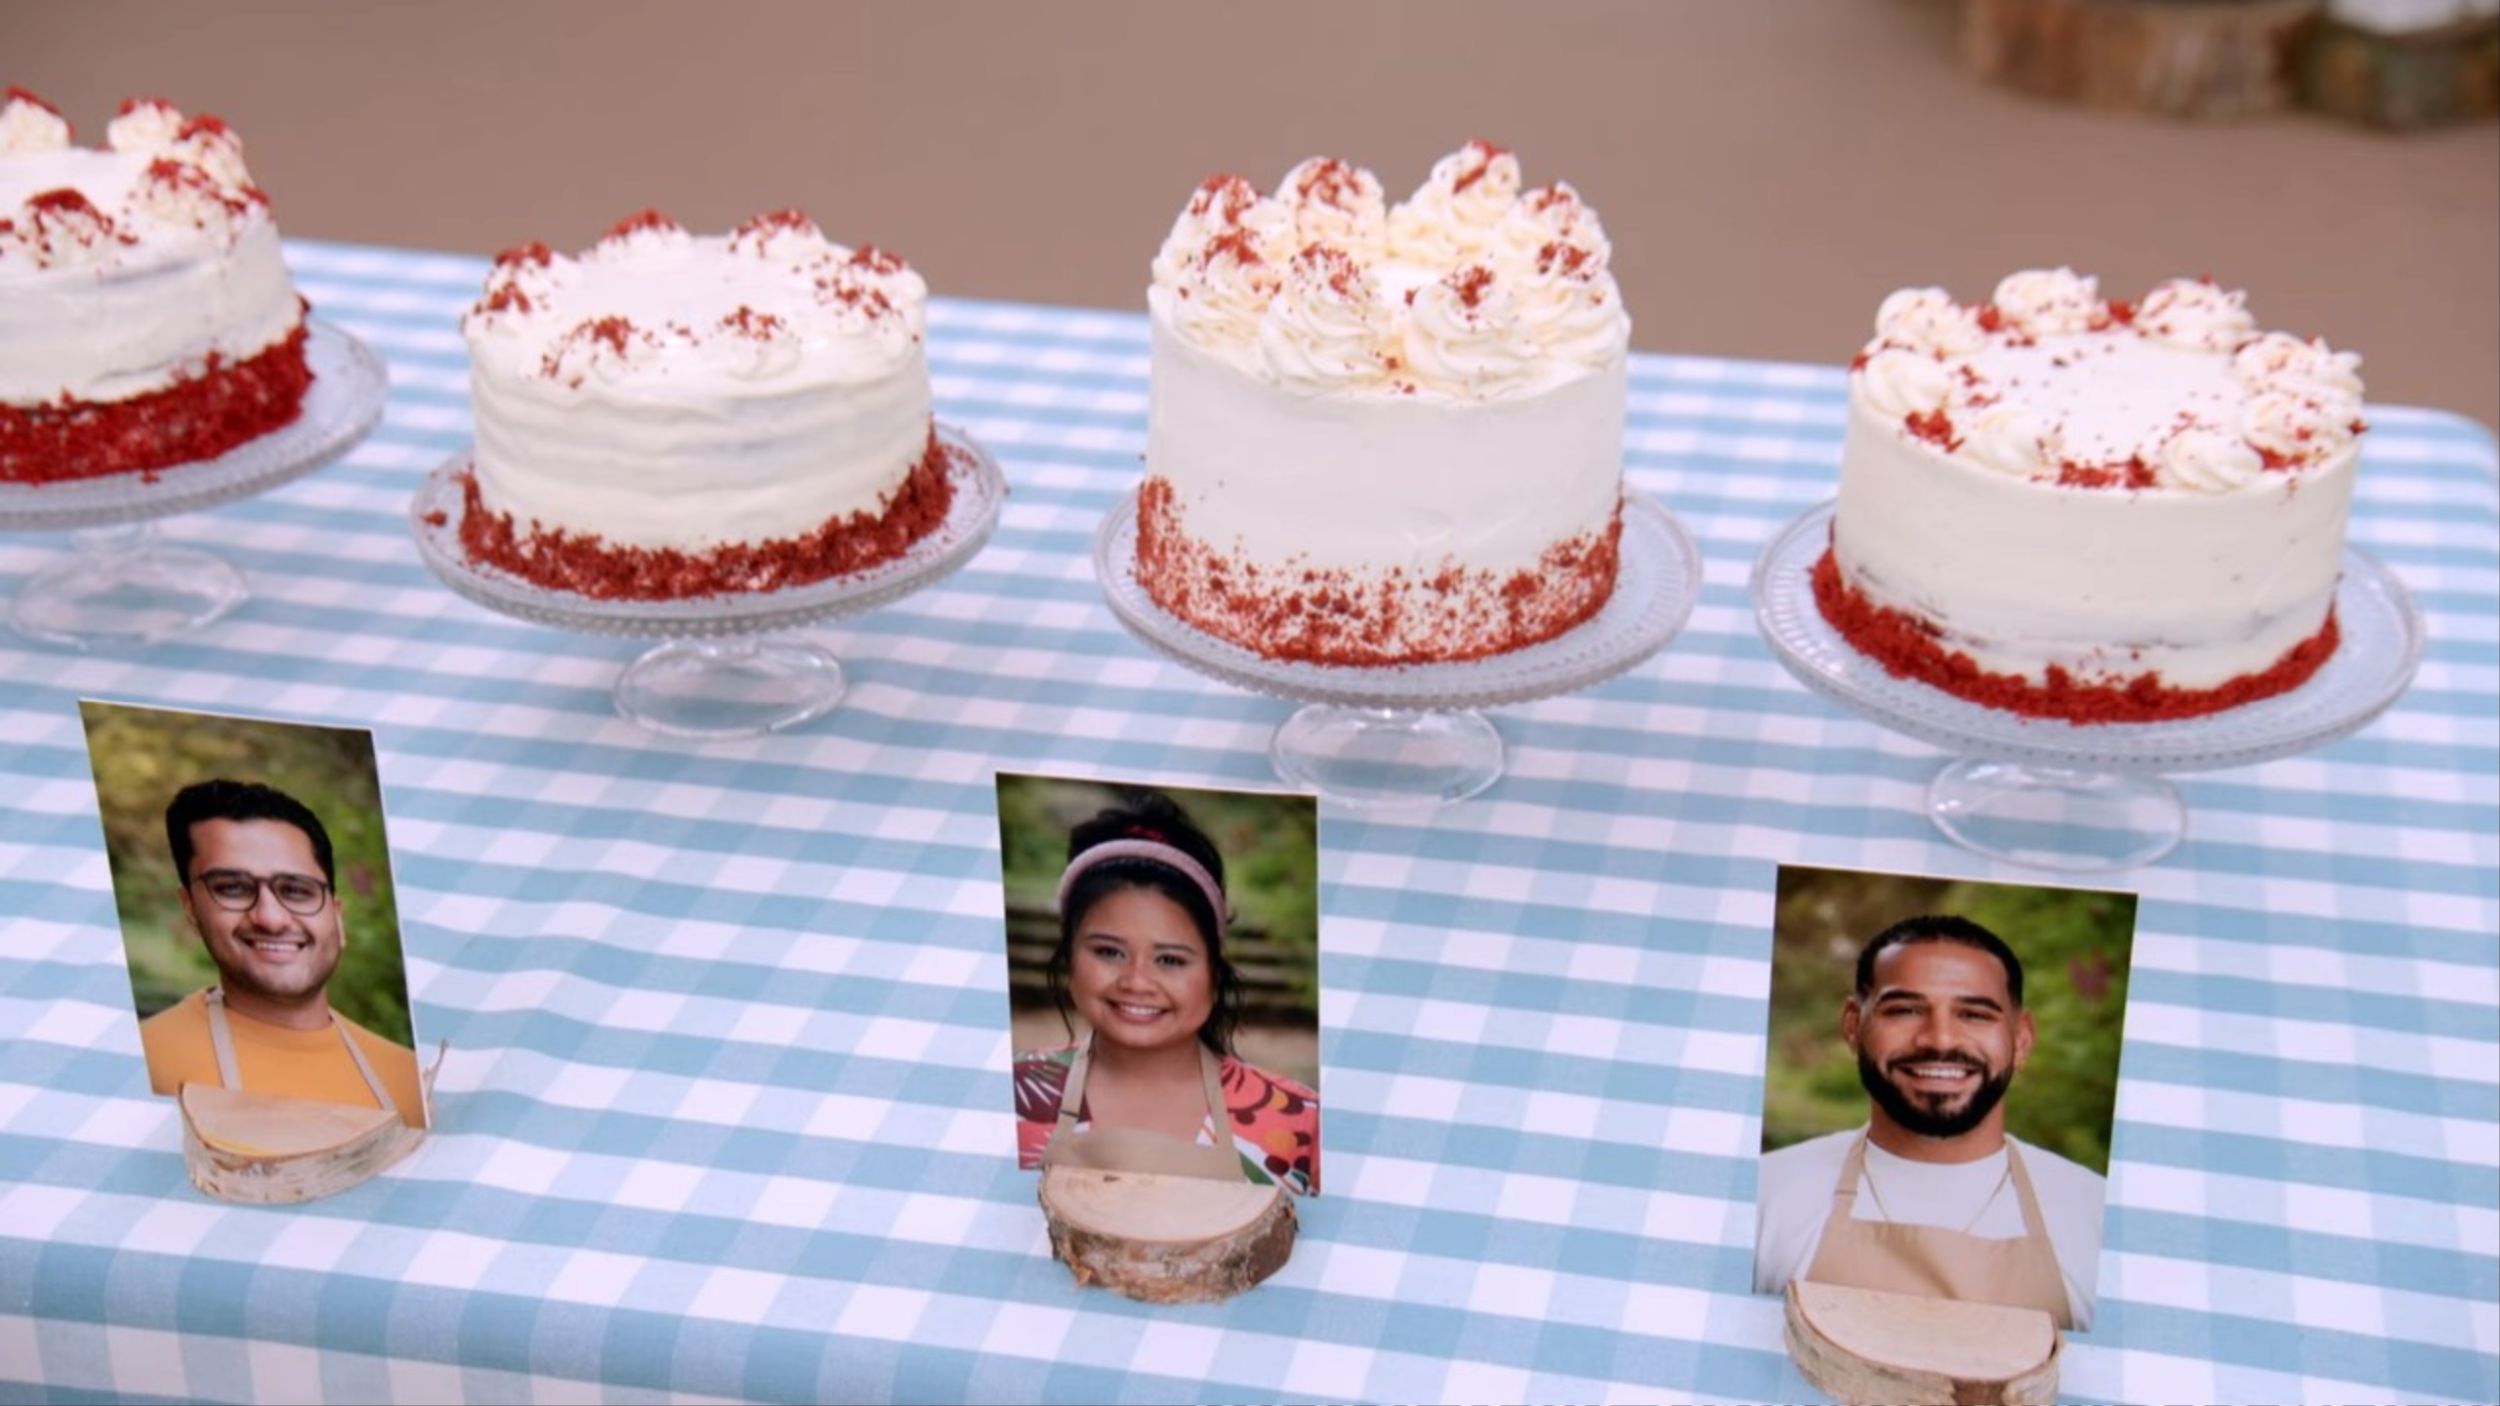 Abdul, Syabira, and Sandro's Red Velvet Cake Cake Week Technicals